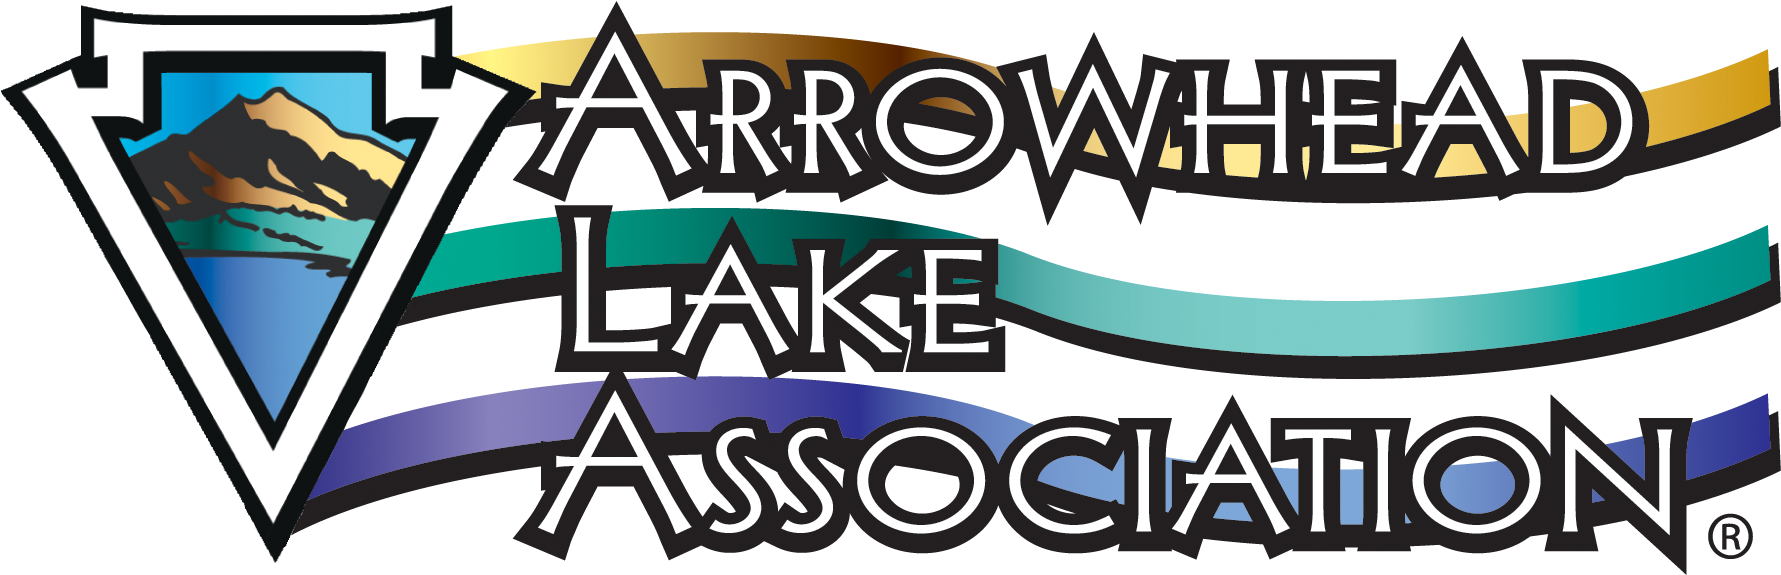 The 2018 Arrowhead Lake Association Election Schedule - Arrowhead Lake Association (1786x618), Png Download